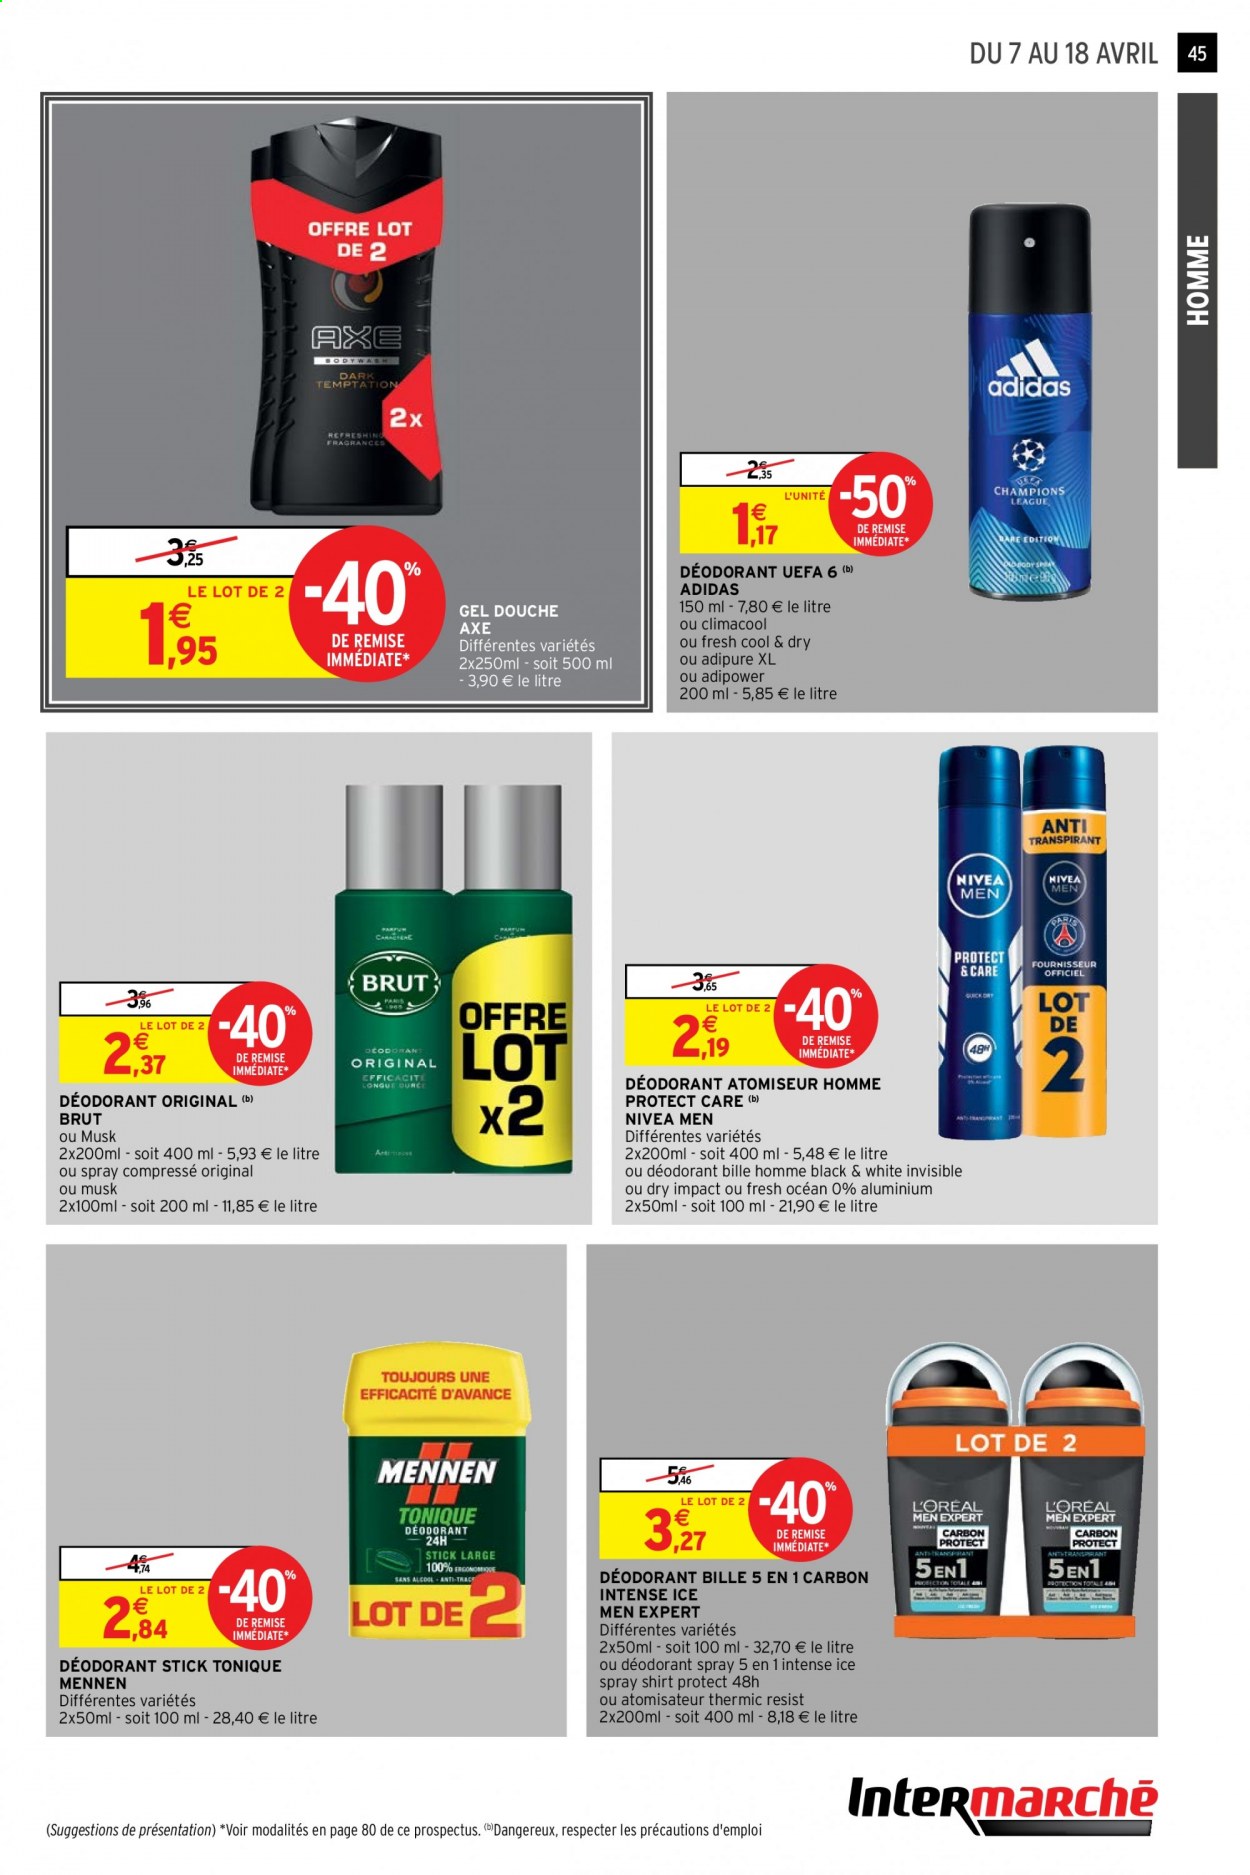 thumbnail - Catalogue Intermarché Hyper - 07/04/2021 - 18/04/2021 - Produits soldés - Adidas, Nivea, gel douche, Axe, déodorant, desodorisant. Page 45.